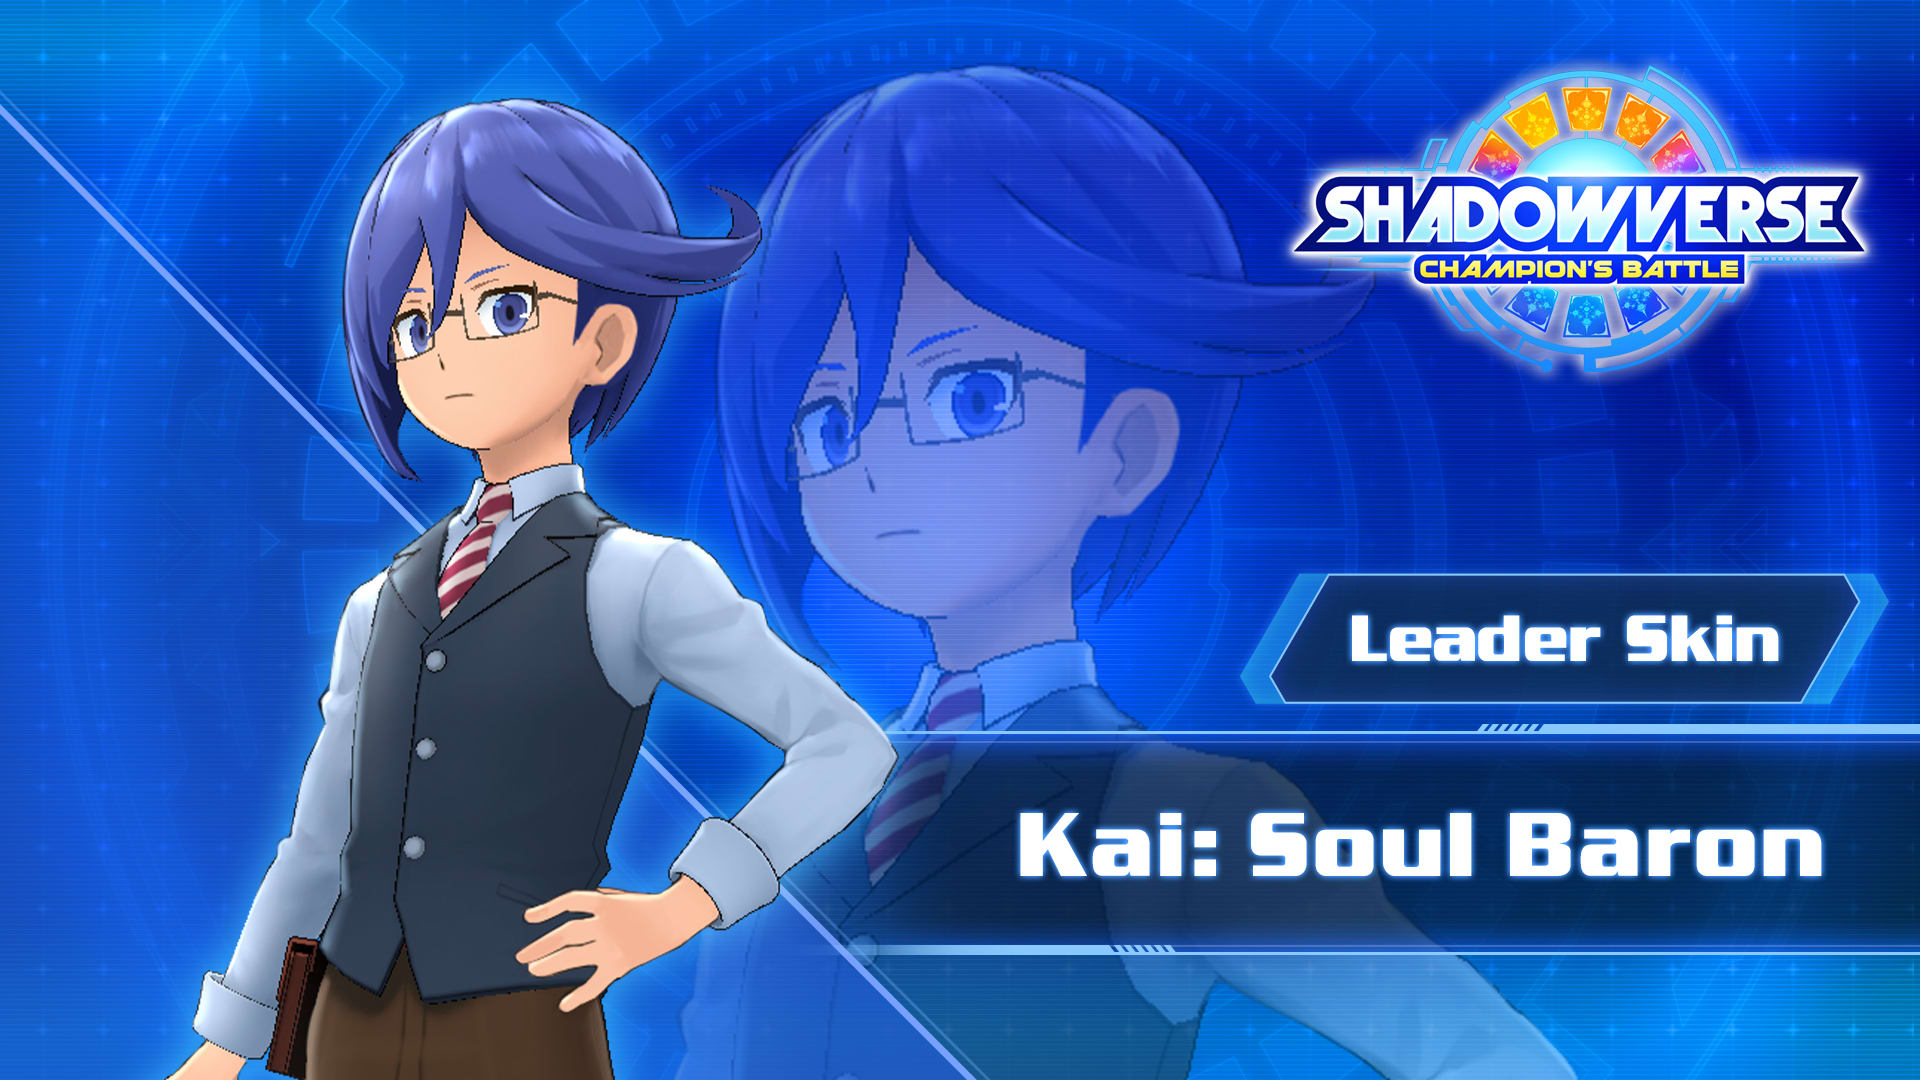 Leader Skin: "Kai: Soul Baron"